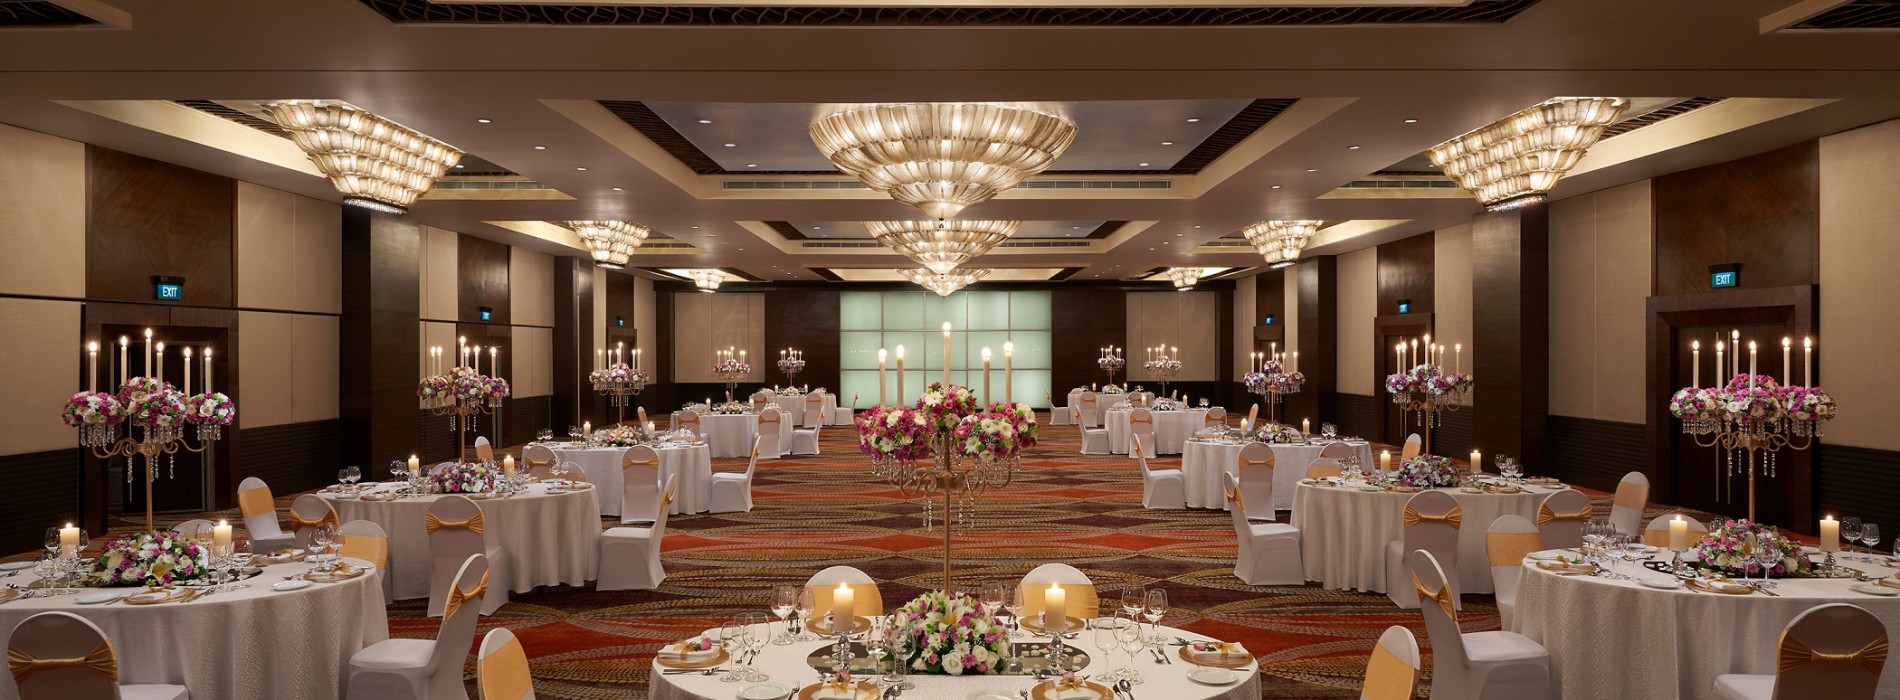 Cinnamon Hotels & Resorts in Sri Lanka organized a FAM trip for Indian wedding planners